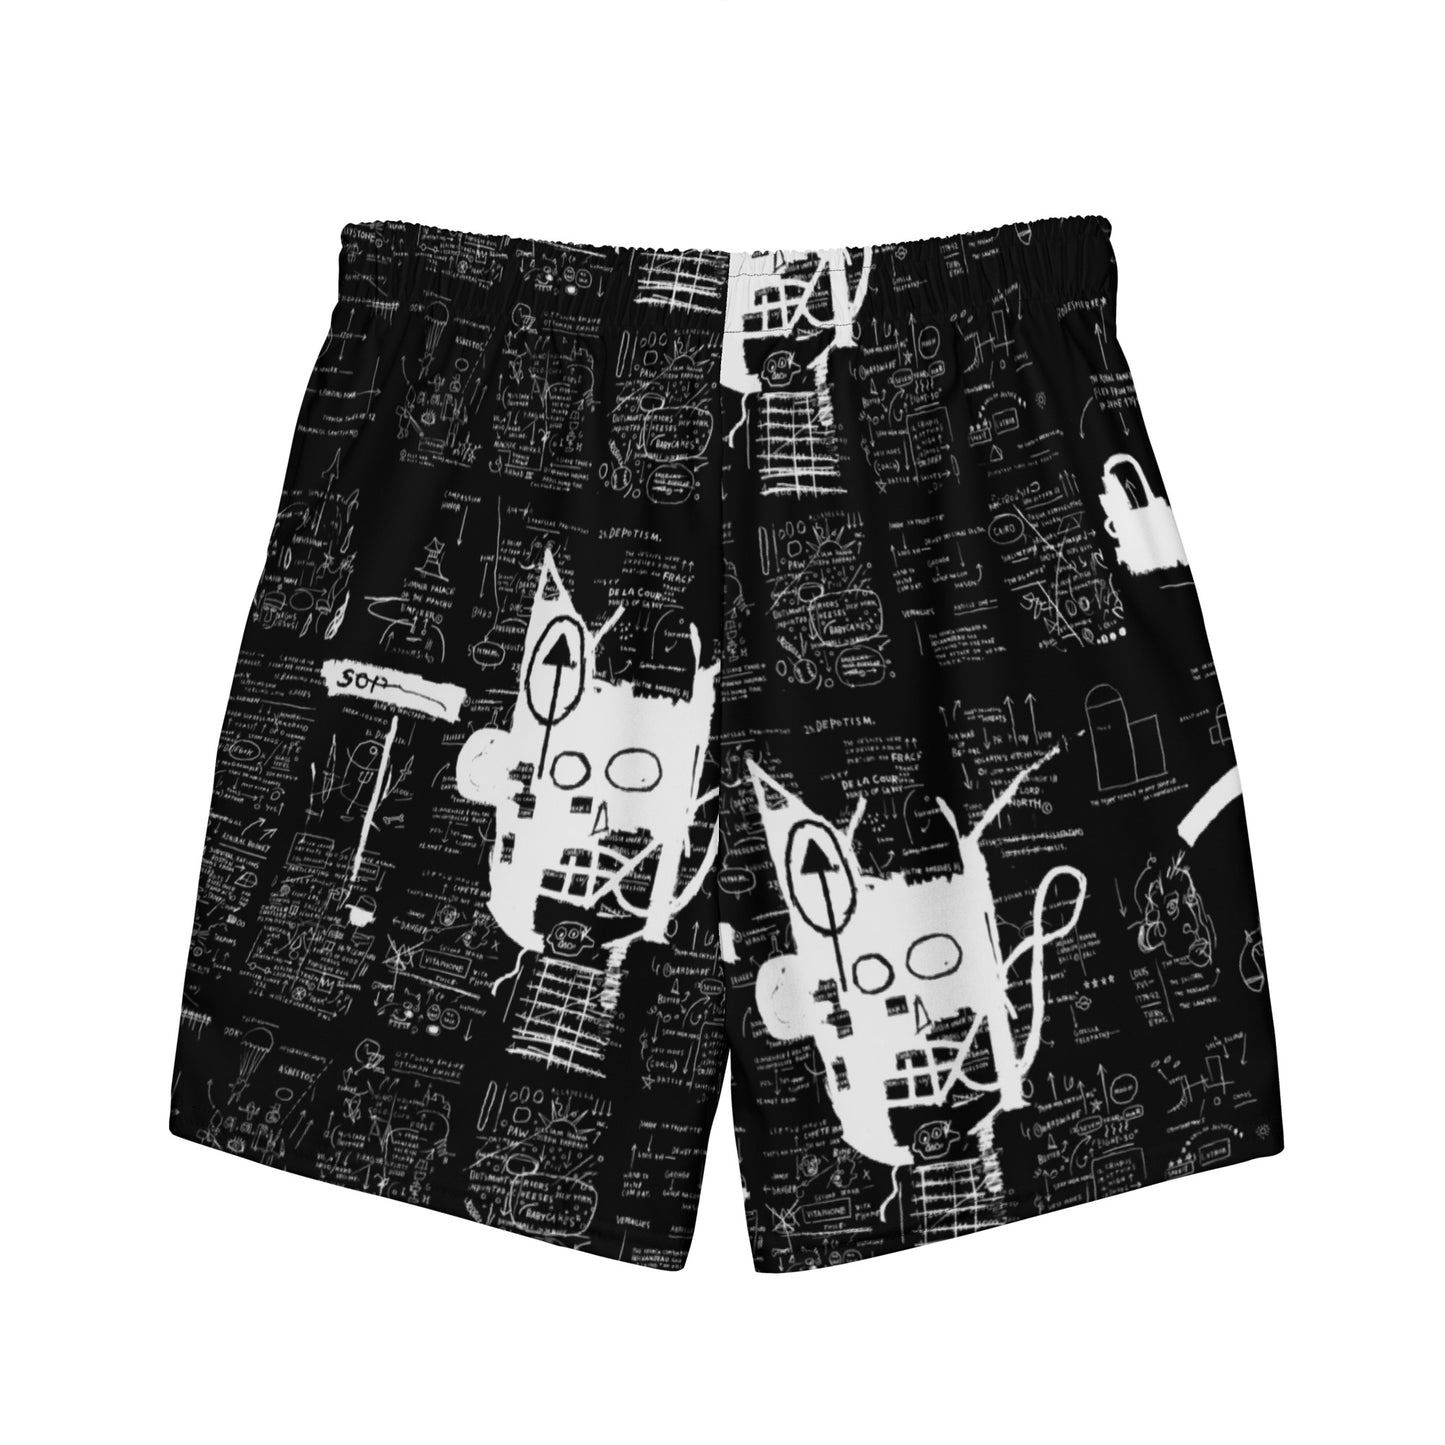 Jean-Michel Basquiat "Untitled" Artwork Printed Swim Trunk Shorts